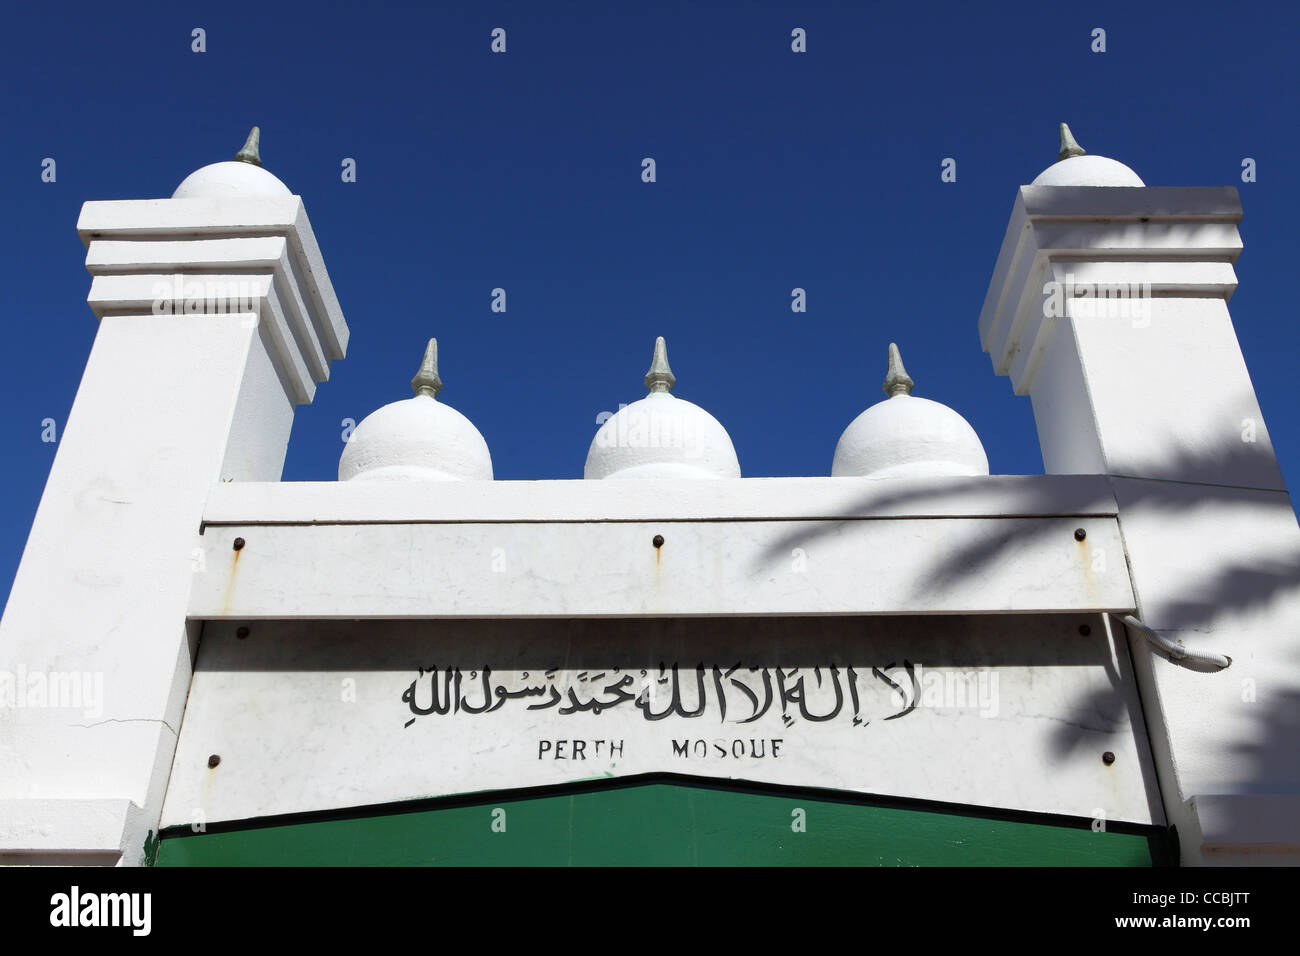 The entrance to Perth Mosque in Perth, Australia. Stock Photo